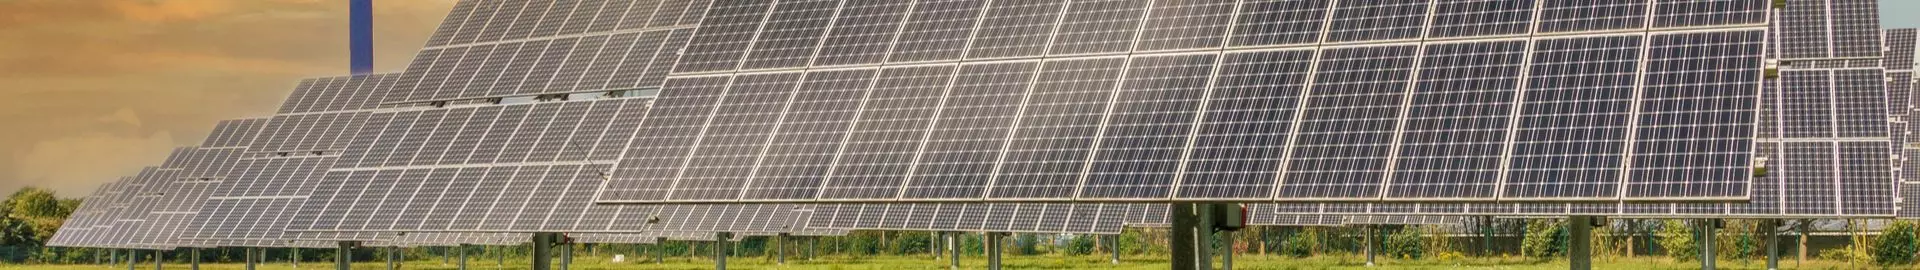 Floating Solar Panels Market